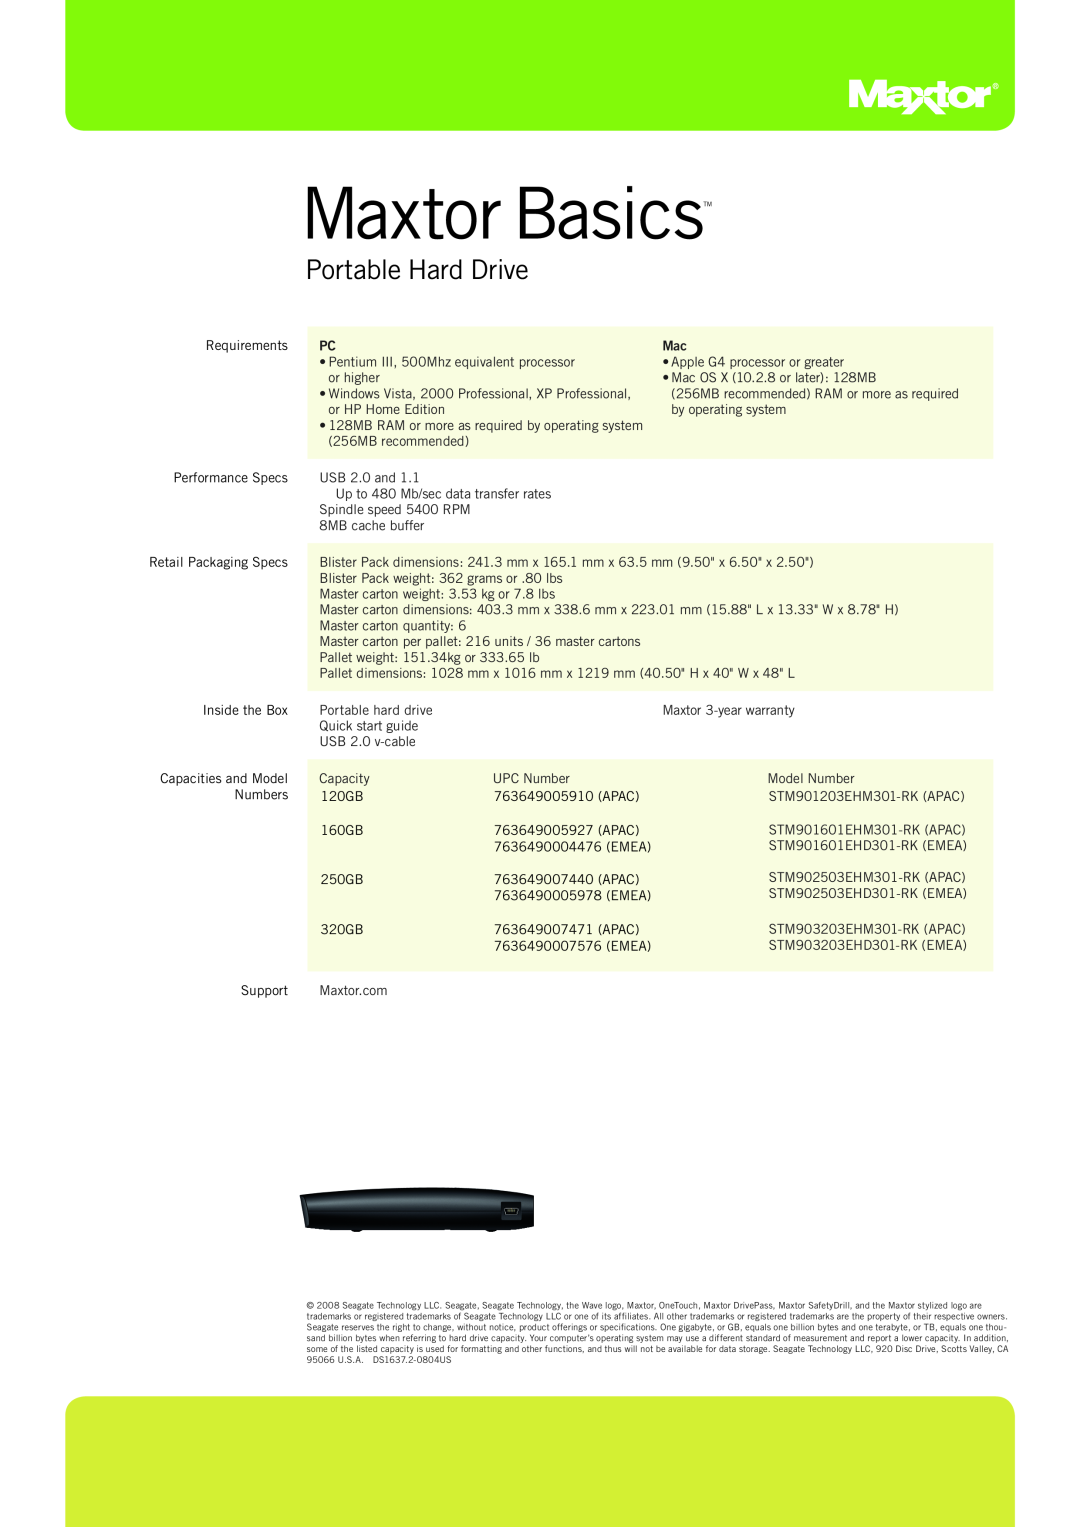 Maxtor STM903203EHM301-RK, STM902503EHD301-RK, STM901601EHM301-RK, STM902503EHM301-RK Maxtor BasicsTM, Portable Hard Drive 